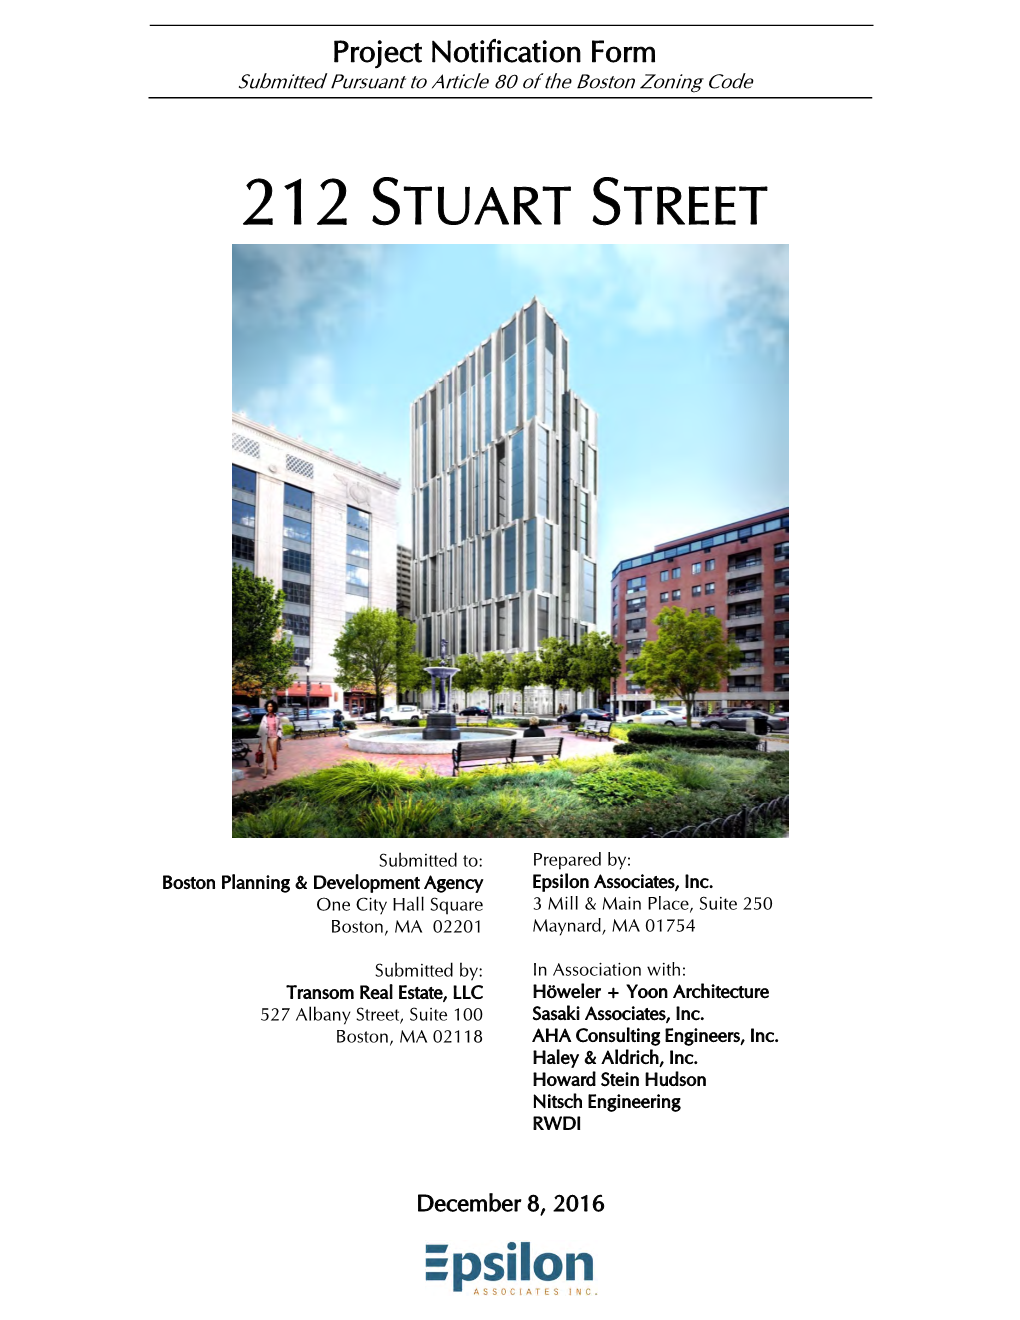 212 Stuart Street